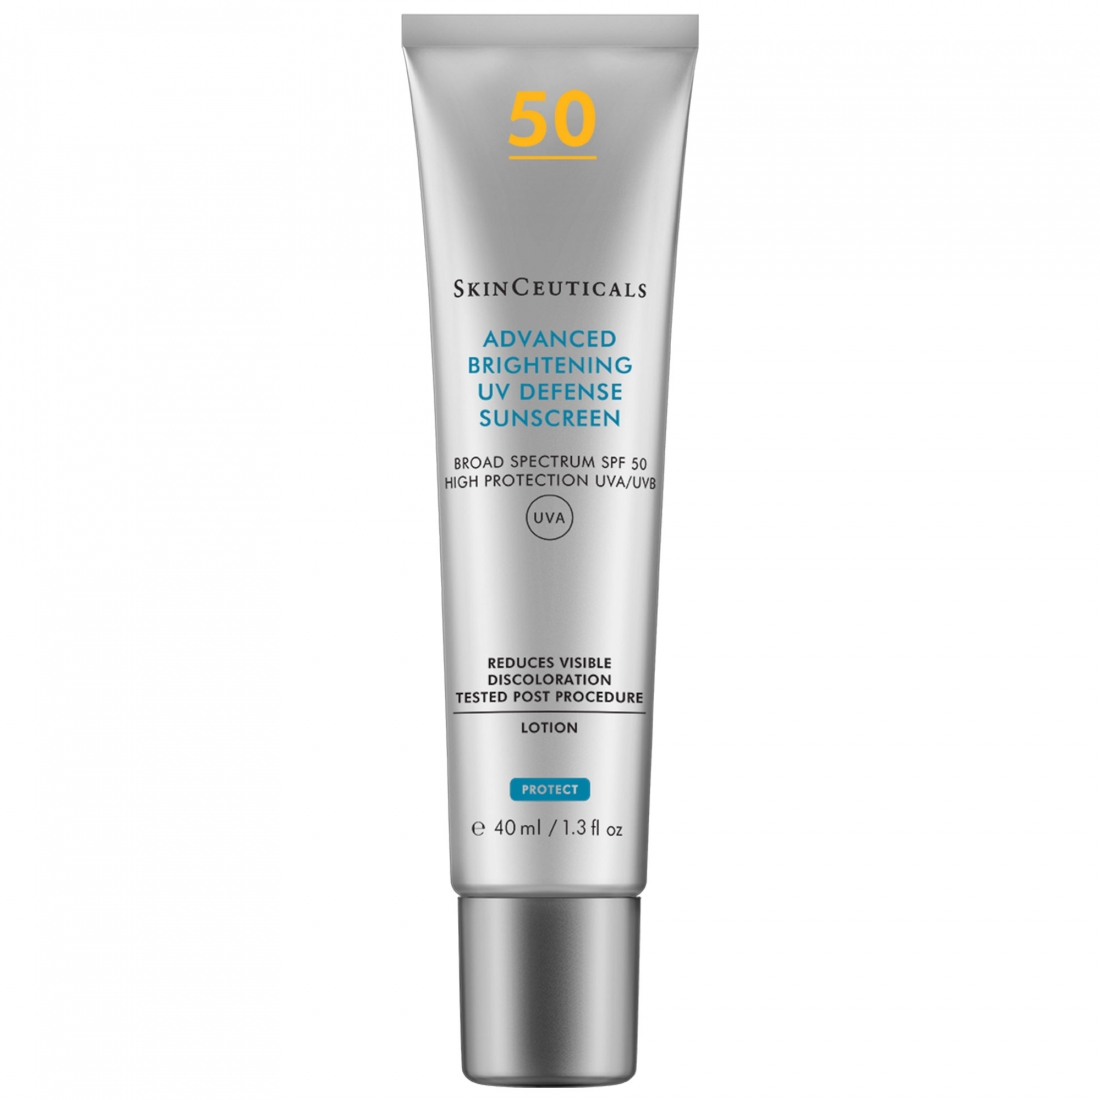 Skin Ceuticals Advanced Brightening UV Defense sunscreen SPF 50